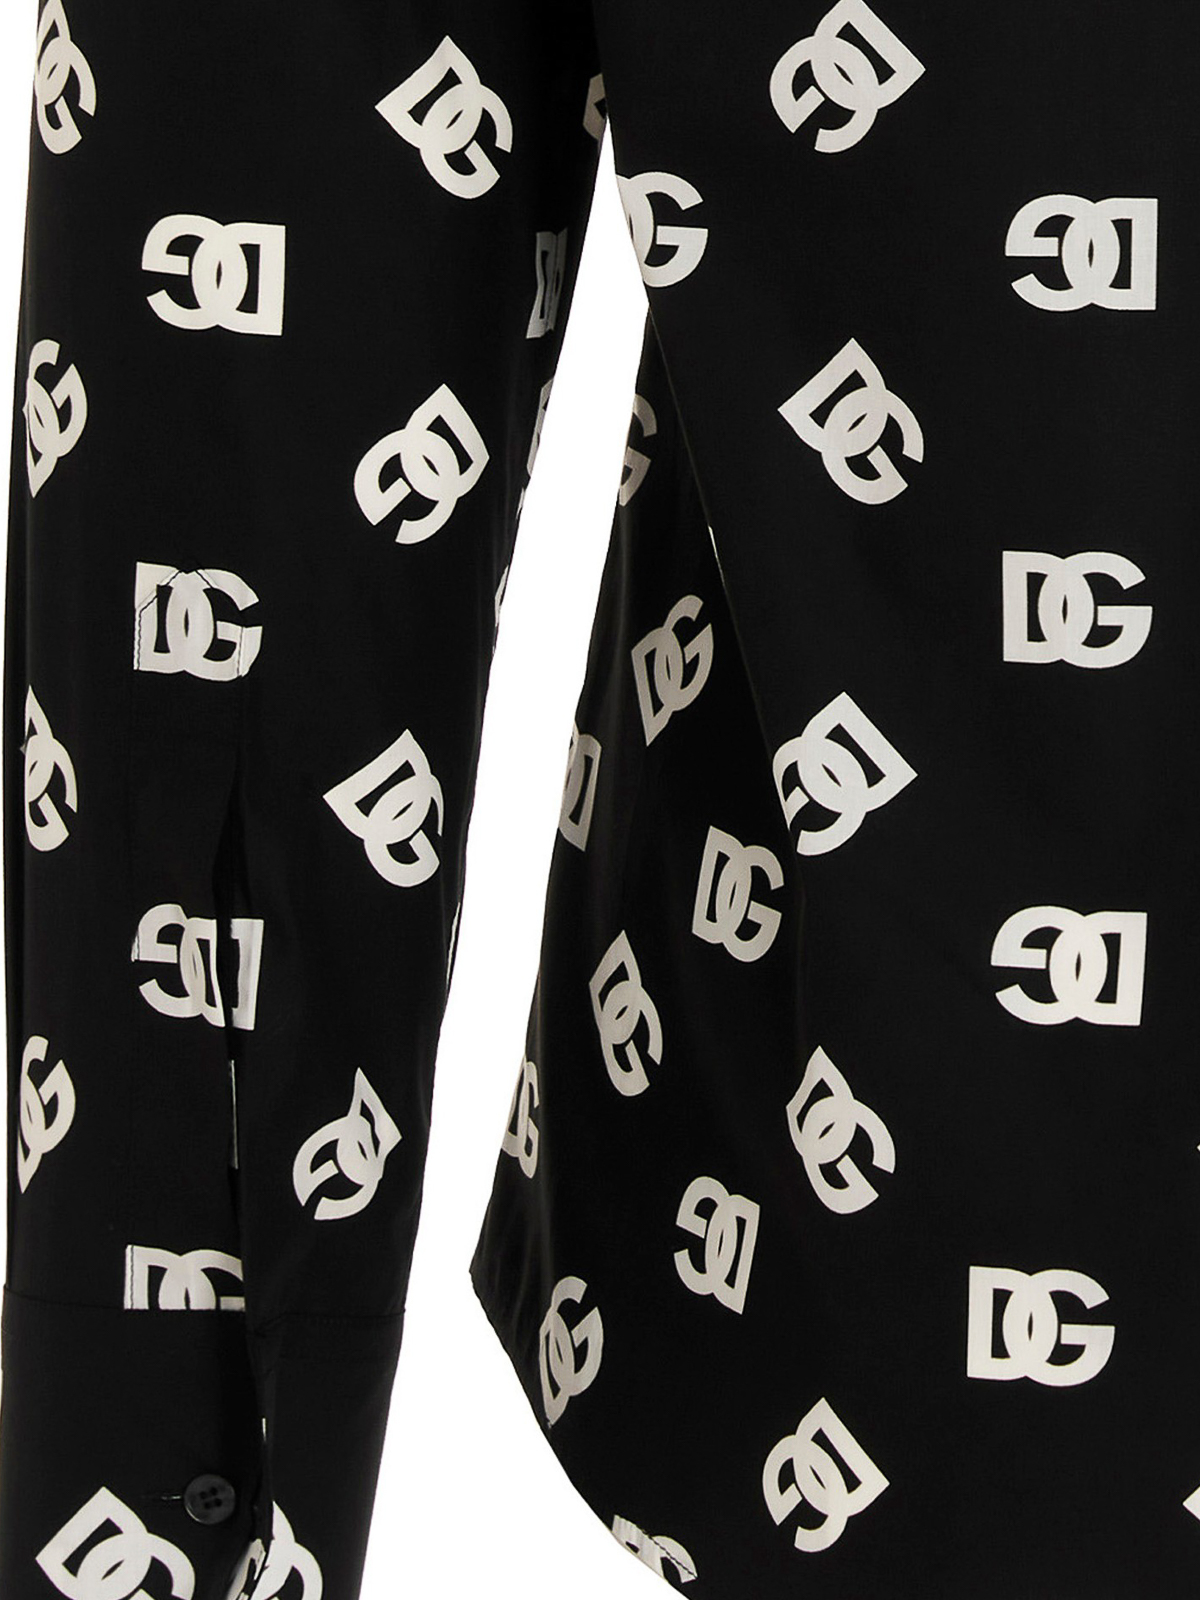 Shirts Dolce & Gabbana - Black sicily shirt - G5IT7THS5OOHAVAN